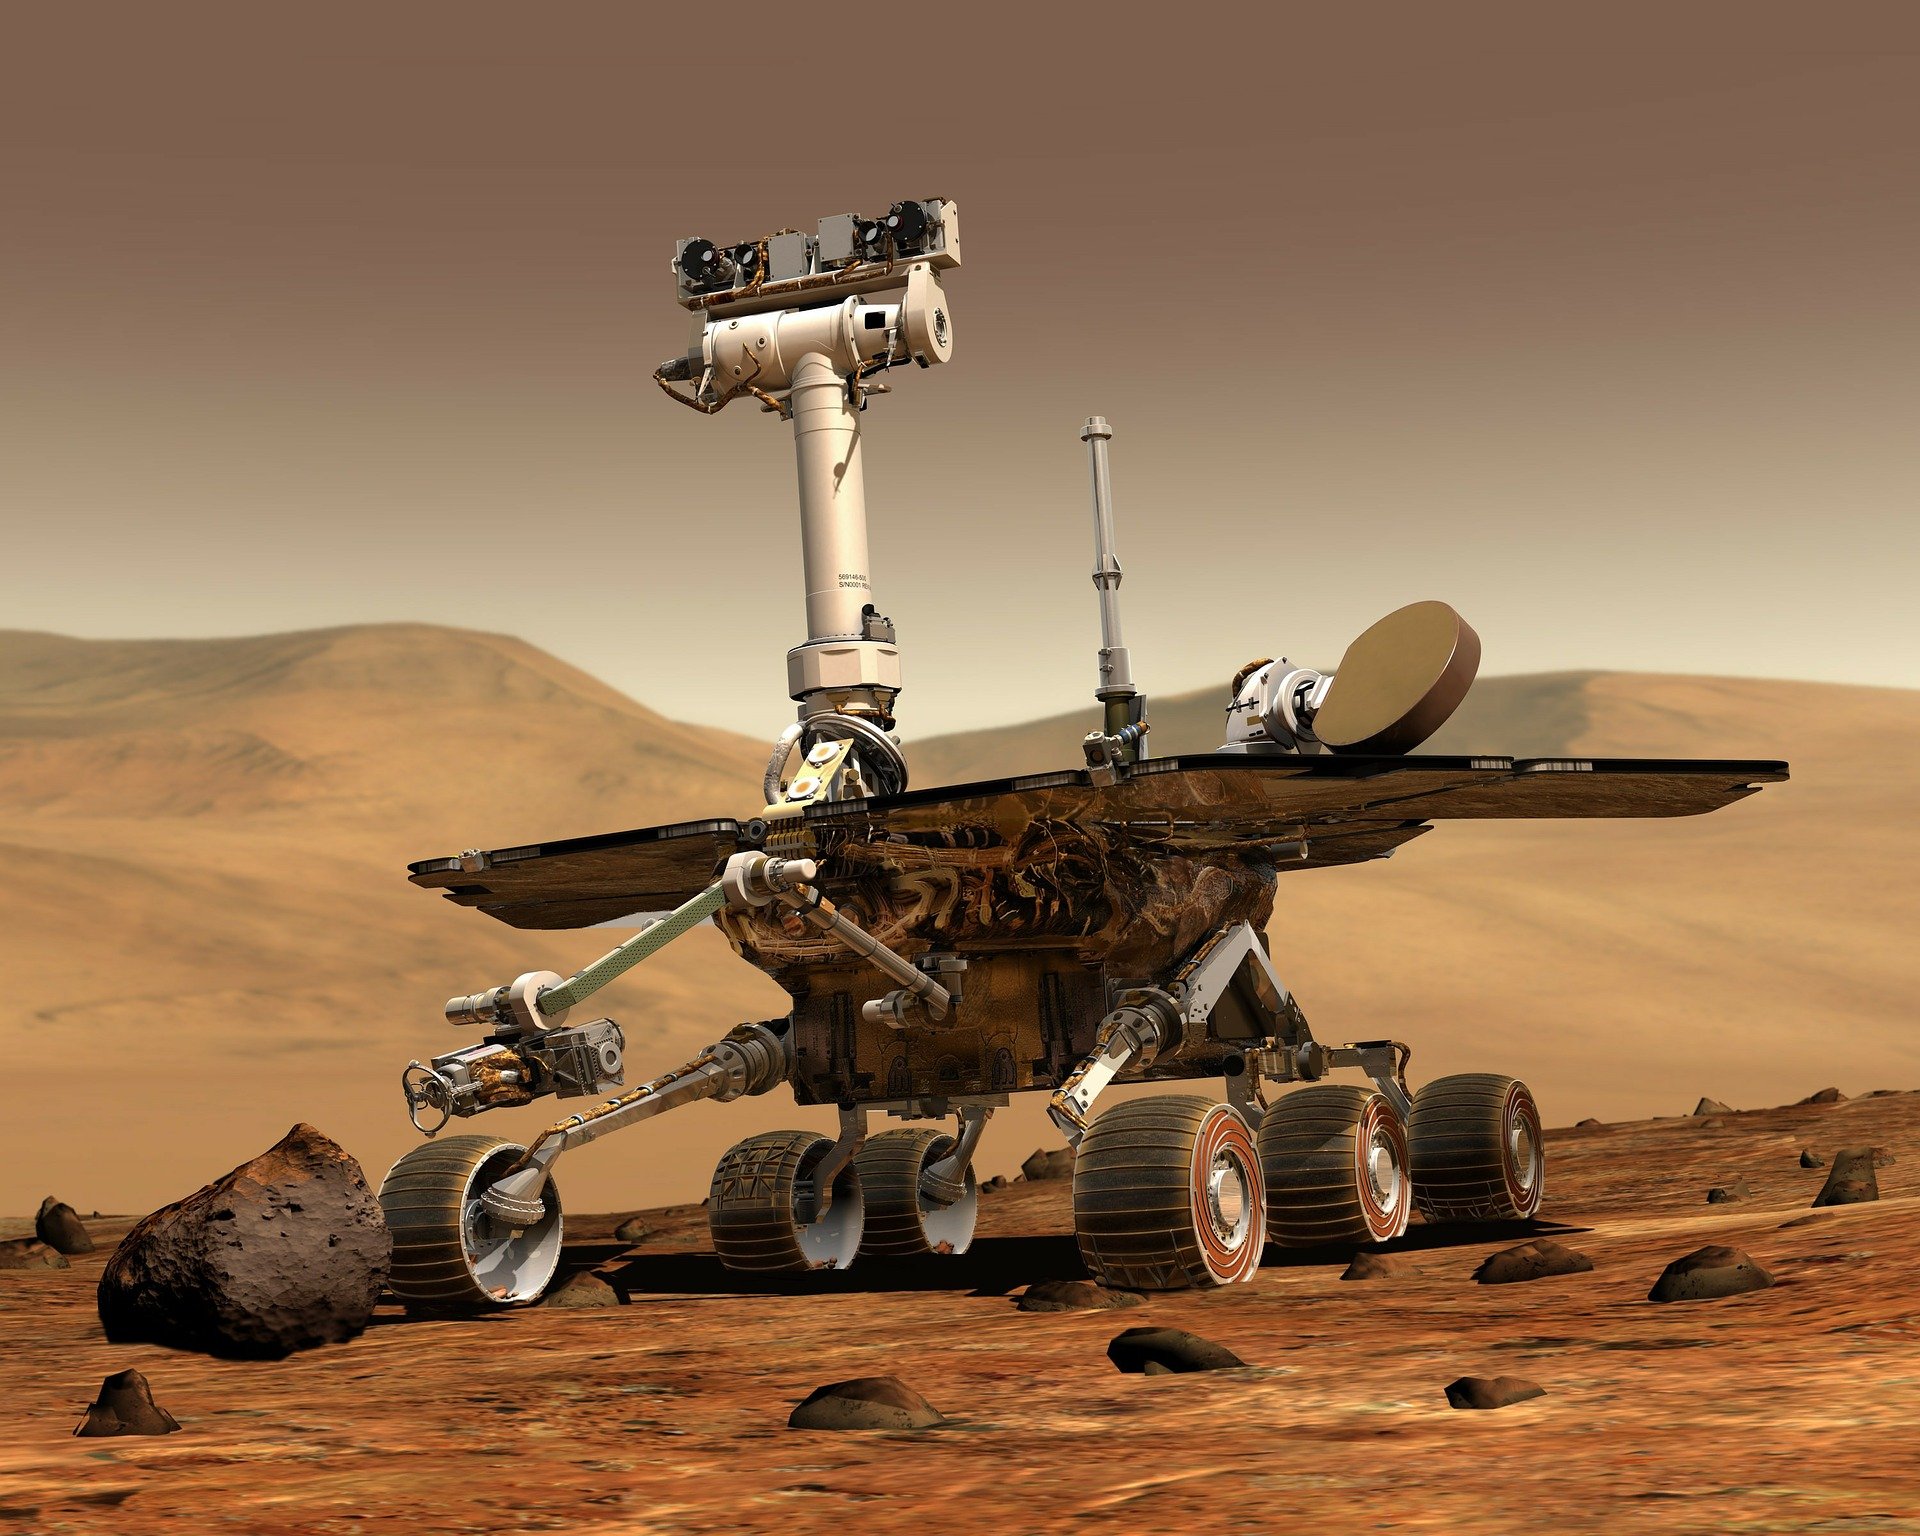 Curiosity found a new organic molecule on Mars